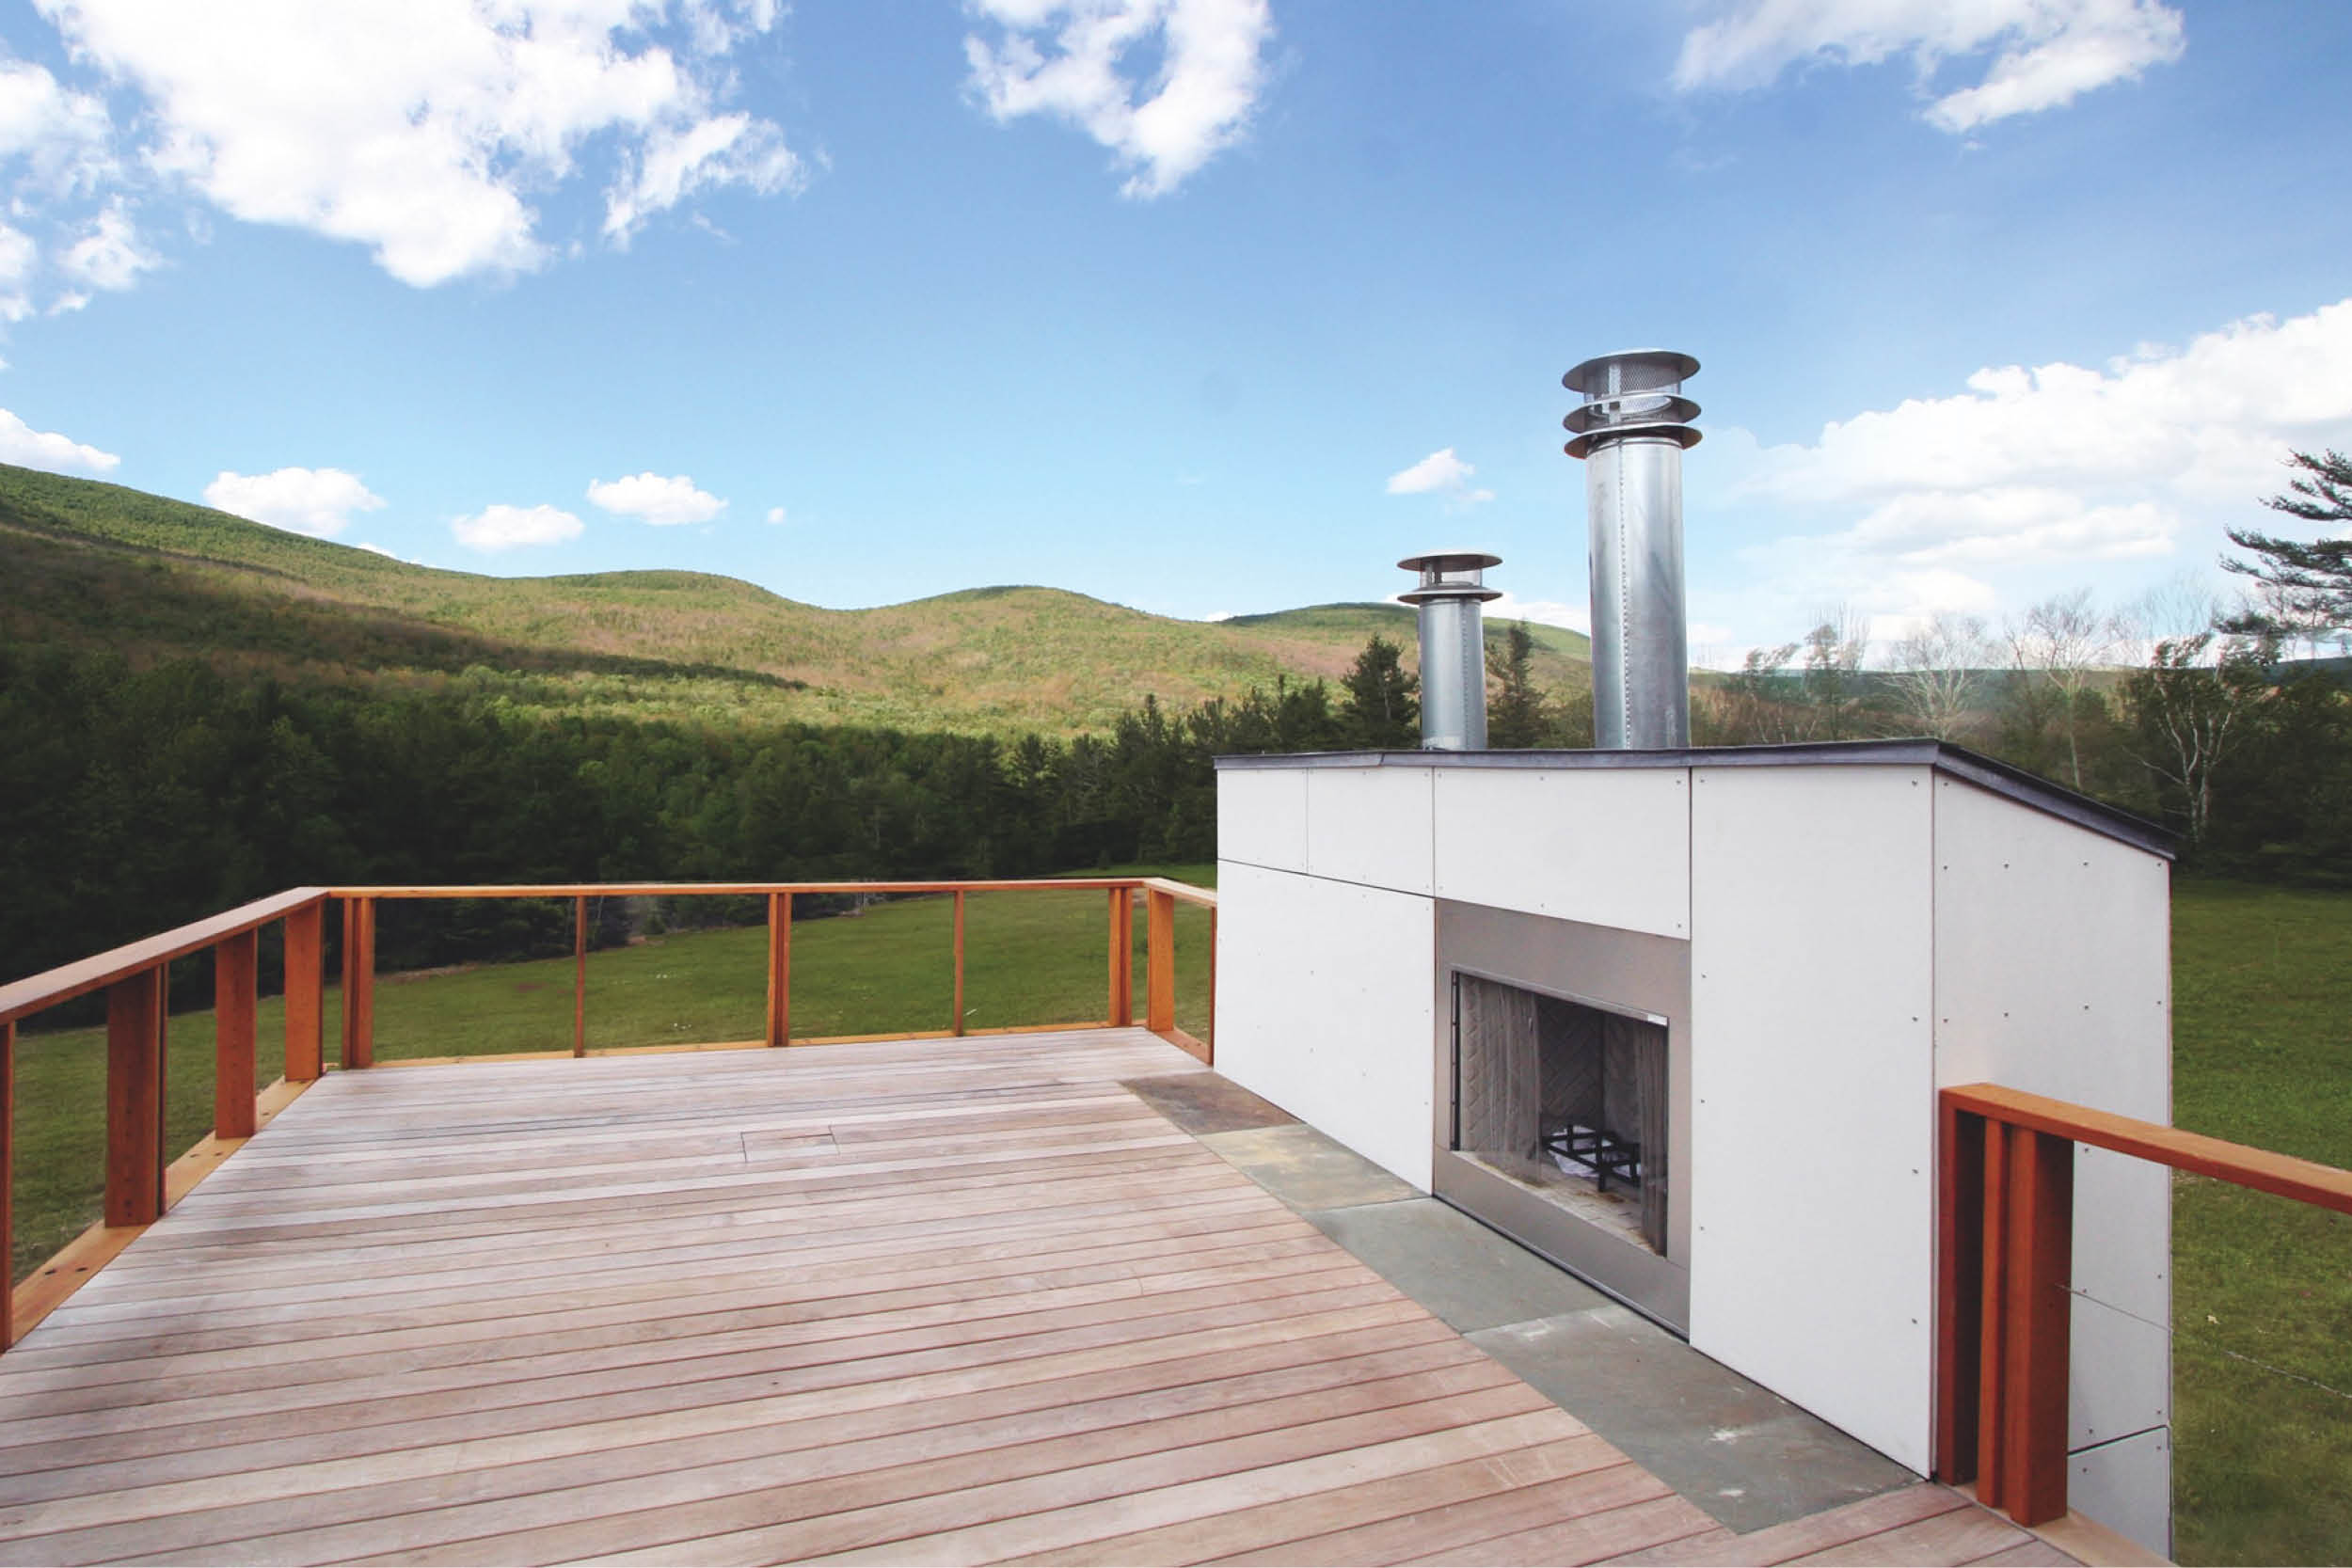 Modern Modular Prefab Meadow House | New York State | Roof Decks Ipe Fireplace White Siding Cedar Cable Rail | RES4